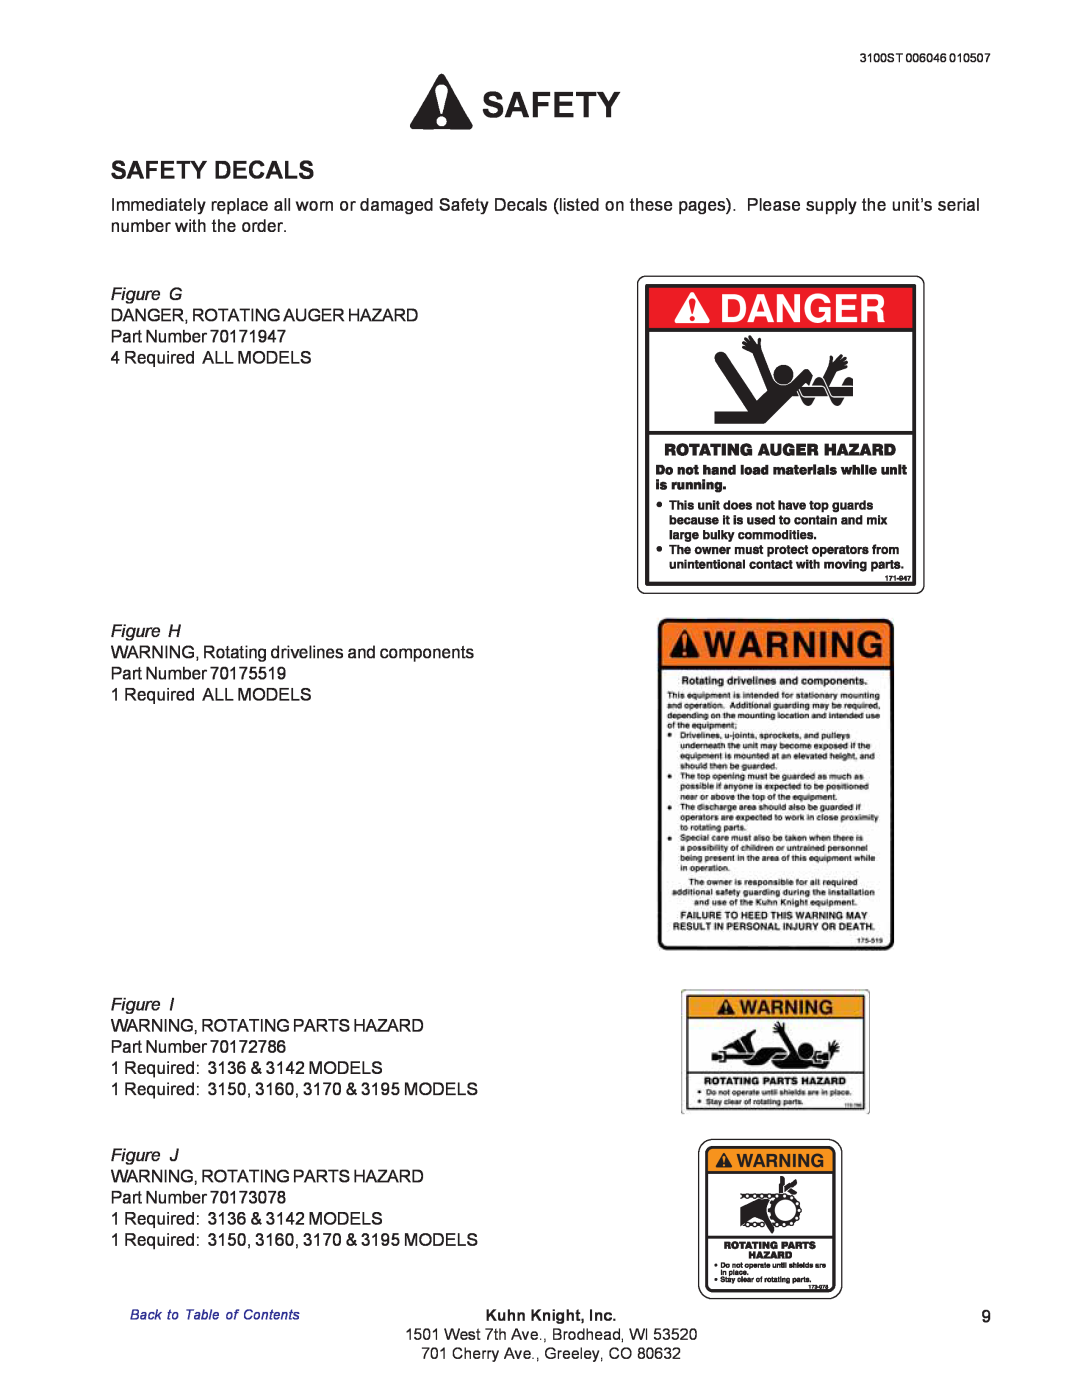 Kuhn Rikon 3100 instruction manual Safety Decals, Figure G, Figure H, Figure J 